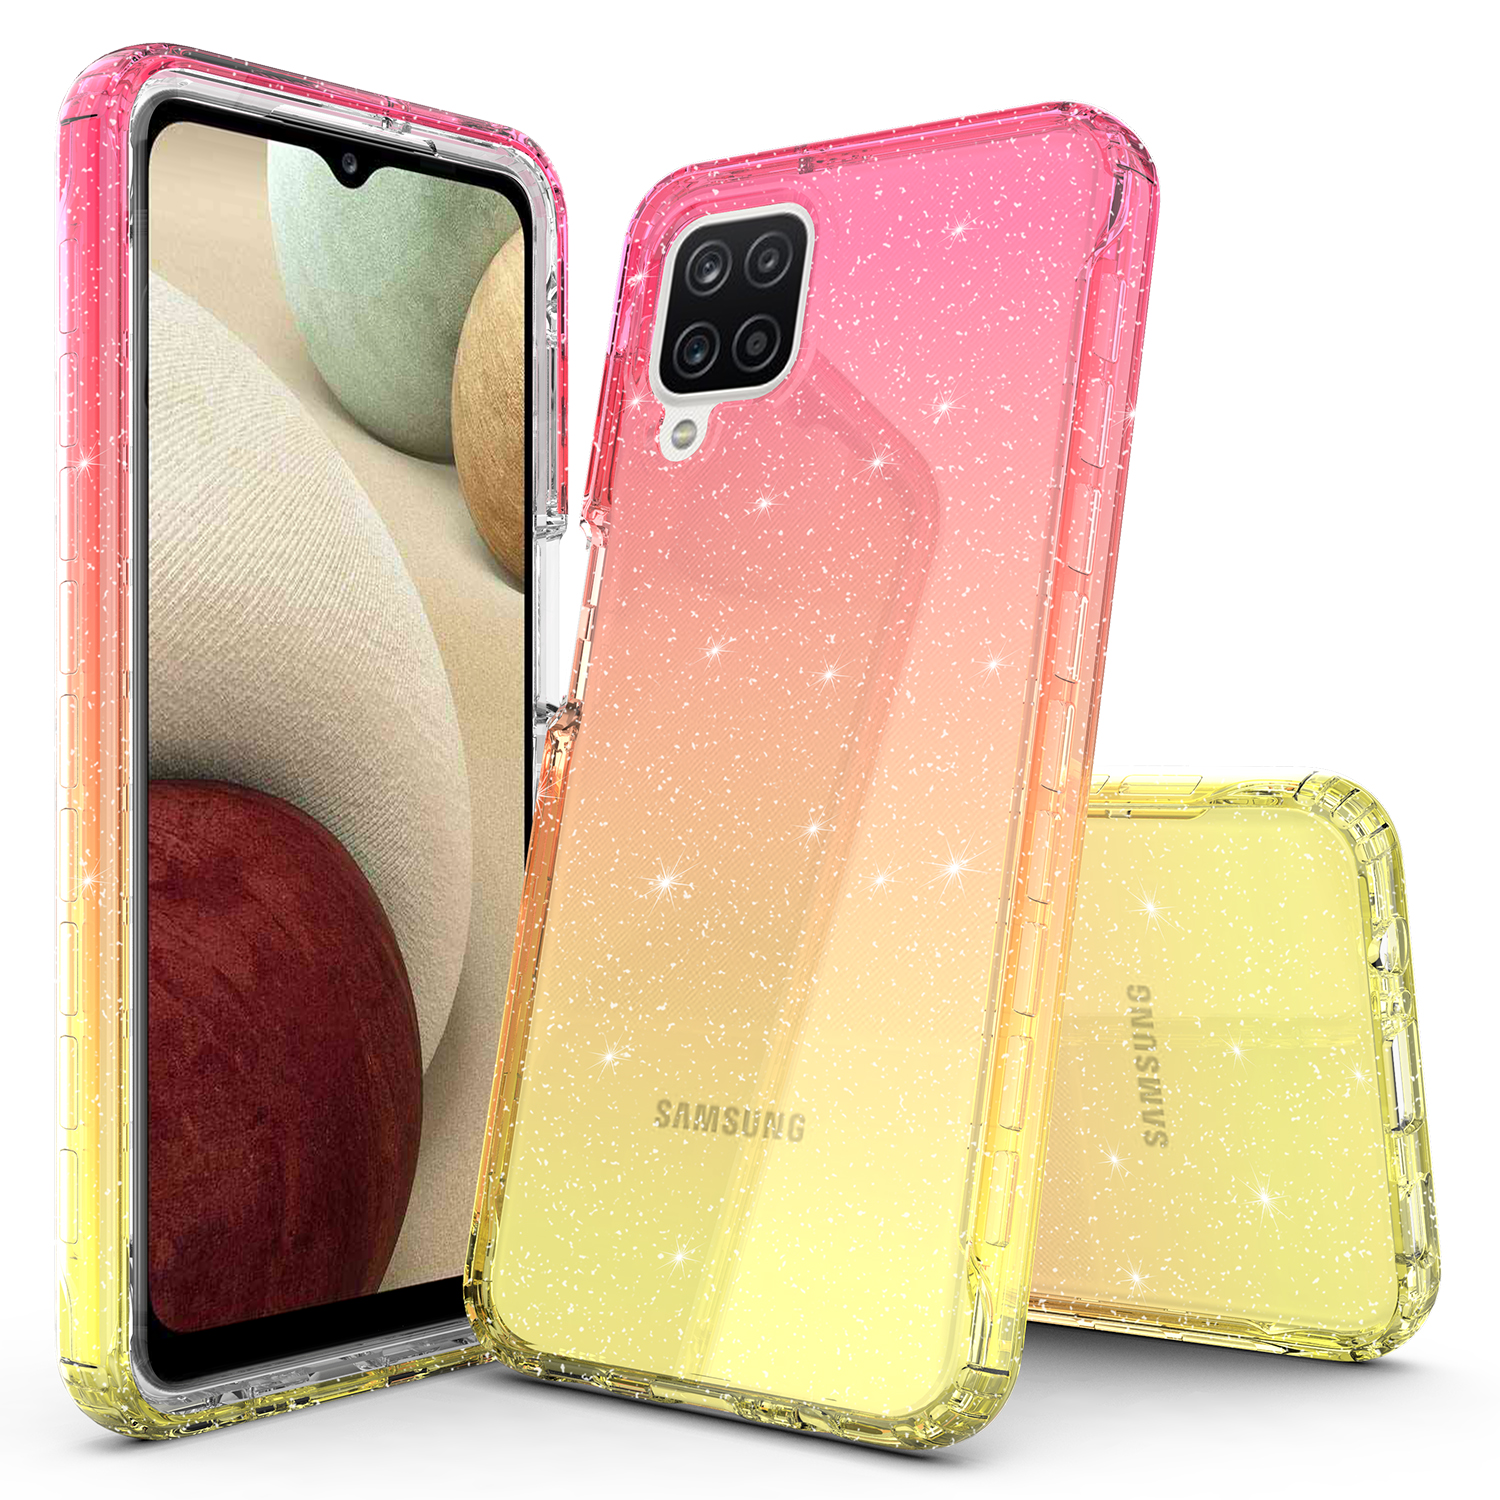 Samsung Galaxy A42 5G Case, Rosebono Hybrid Glitter Sparkle Transparent Colorful Gradient TPU Skin Cover 360 Protection Case For Samsung Galaxy A42 5G (Gold/Pink) - image 1 of 4